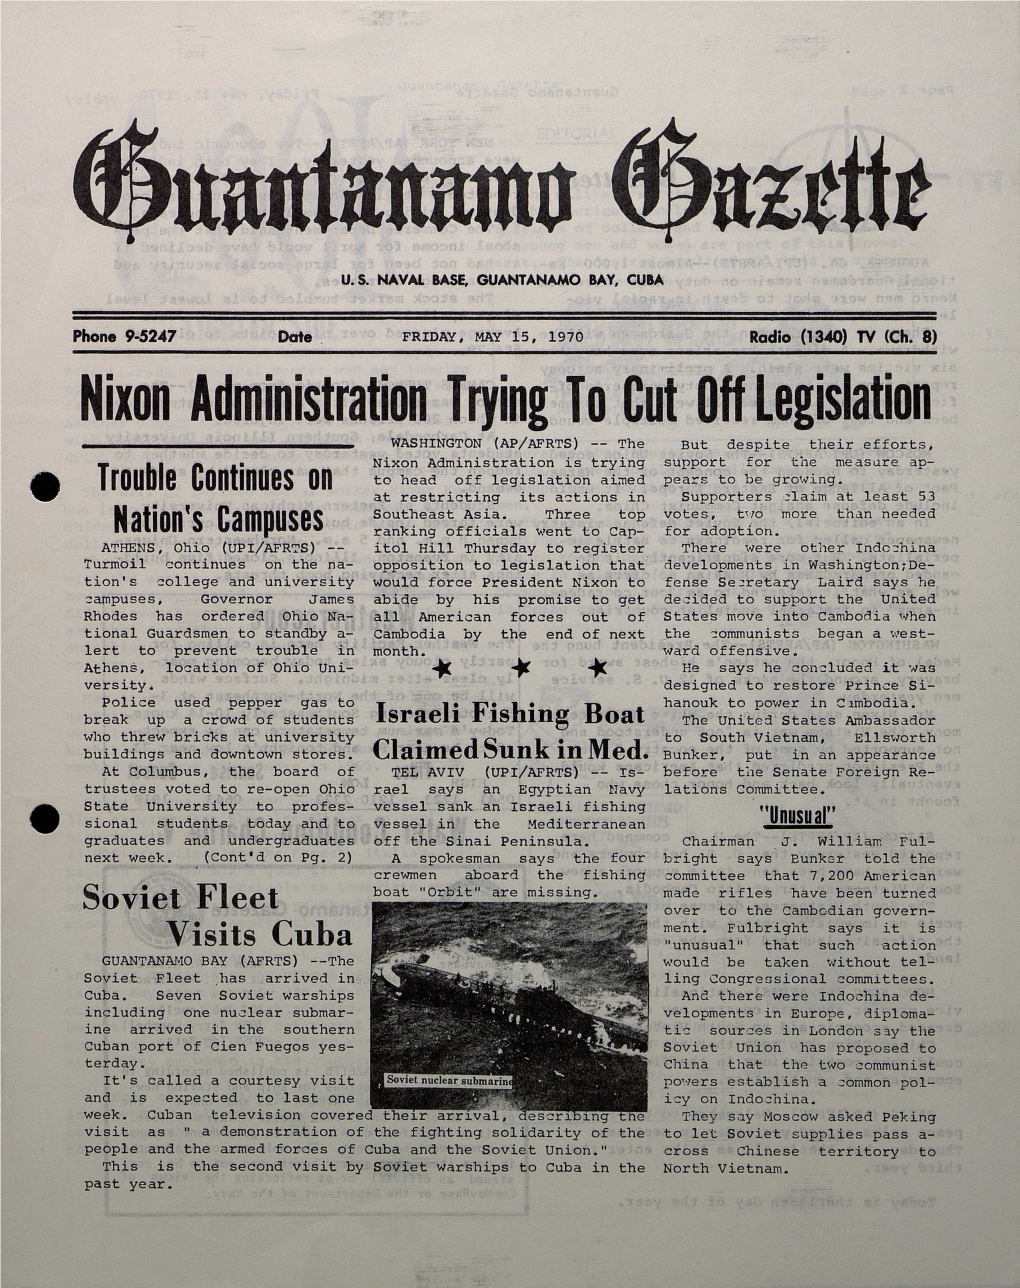 Nixon Administration Trying to Cut Off Legislation